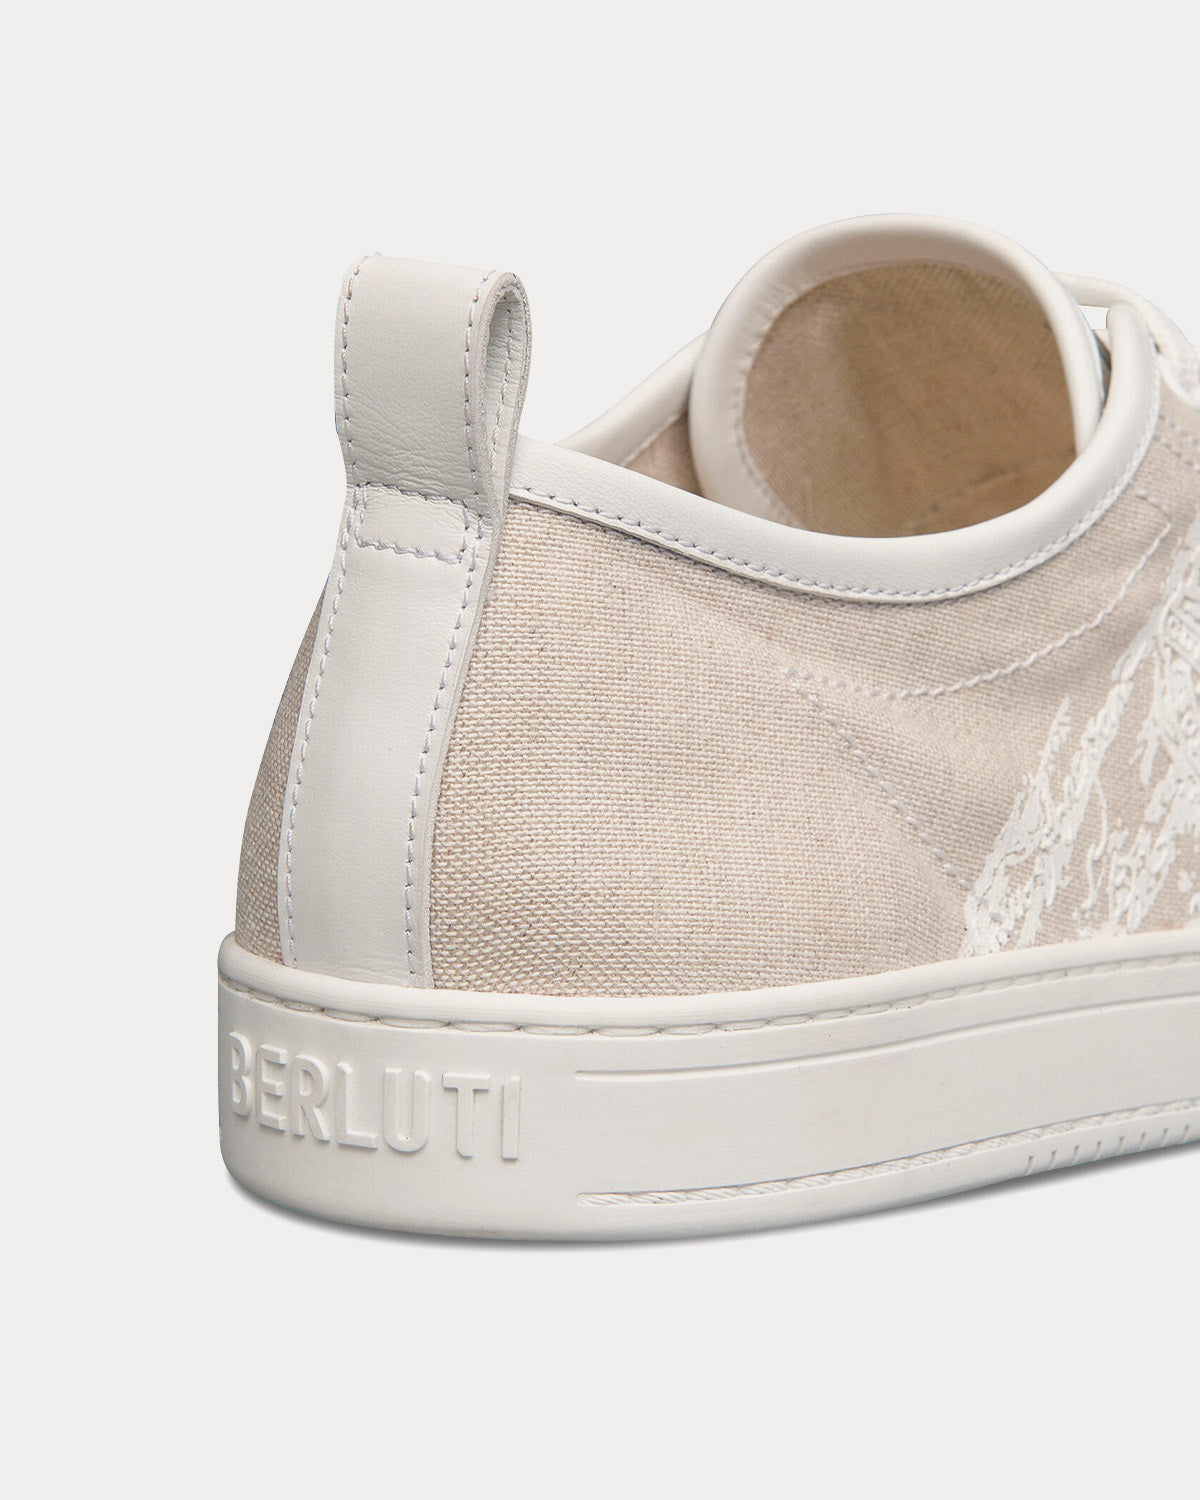 Berluti - Playtime Cotton Beige Low Top Sneakers